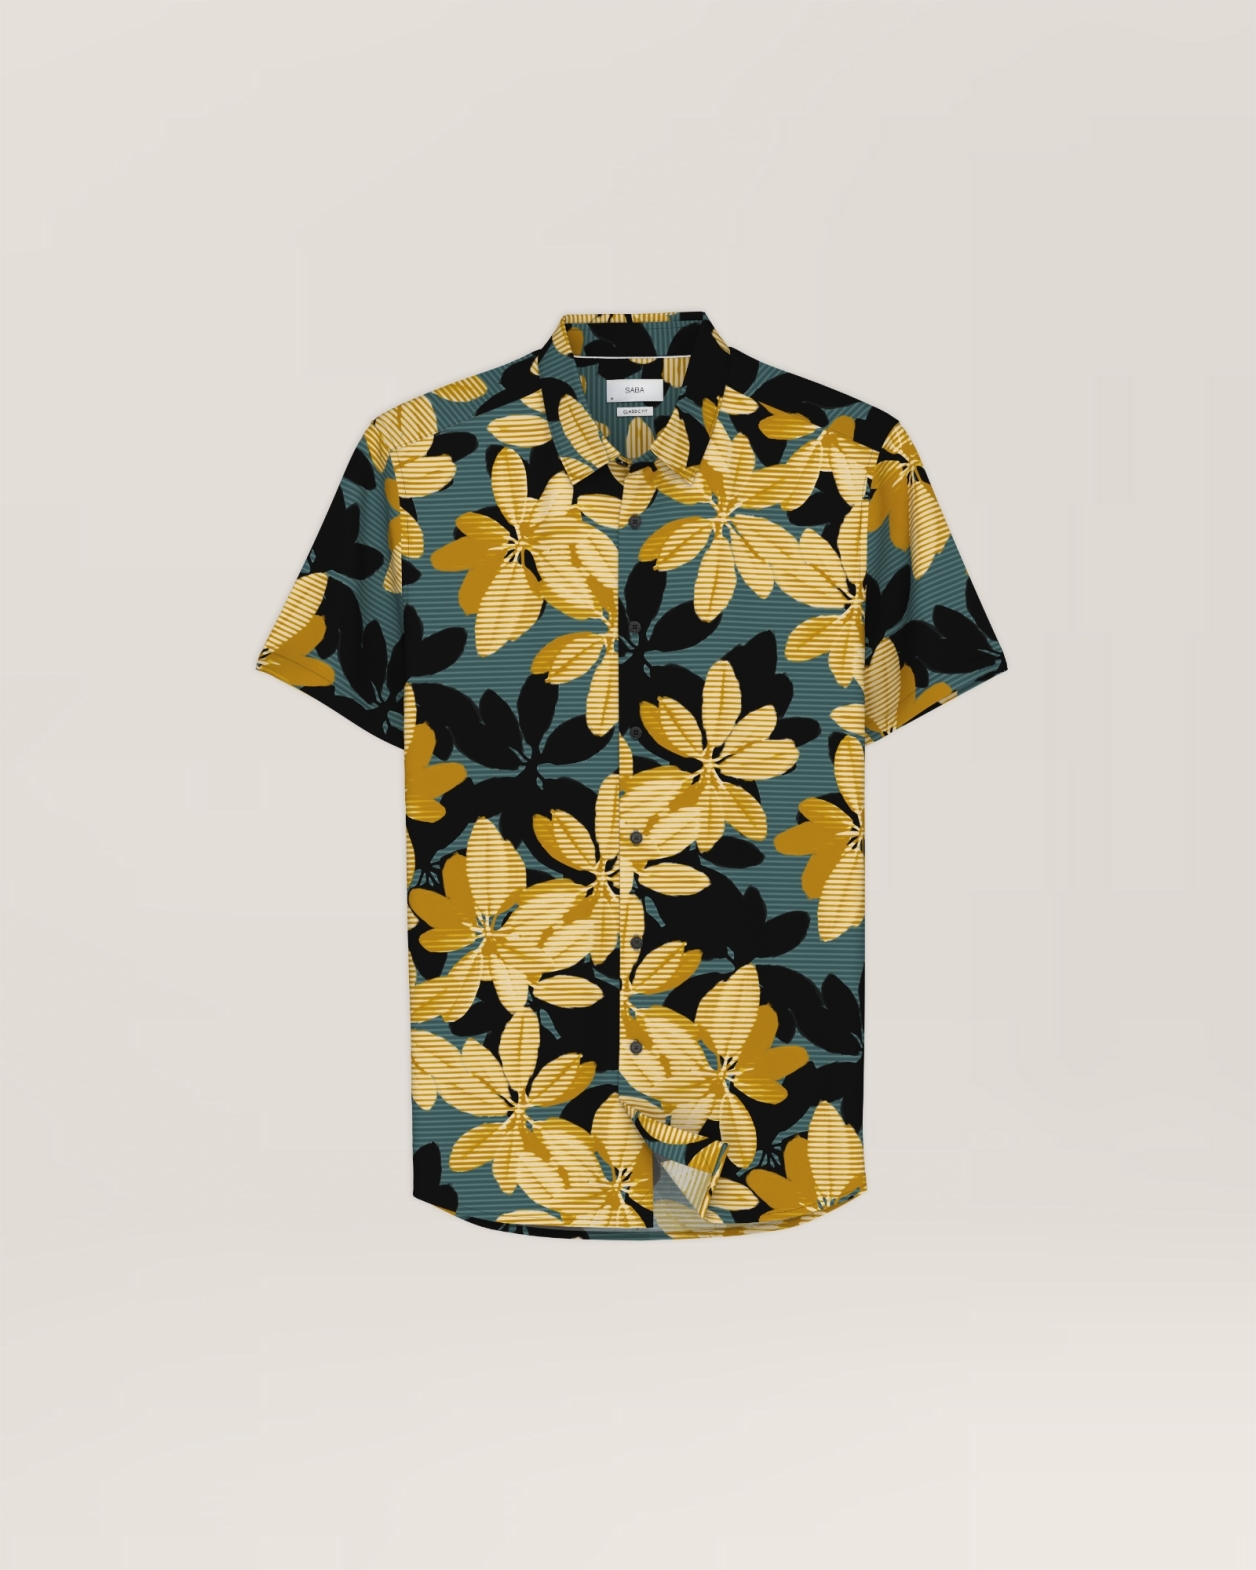 Brunei Short Sleeve Classic Print Shirt in TEAL MULTI